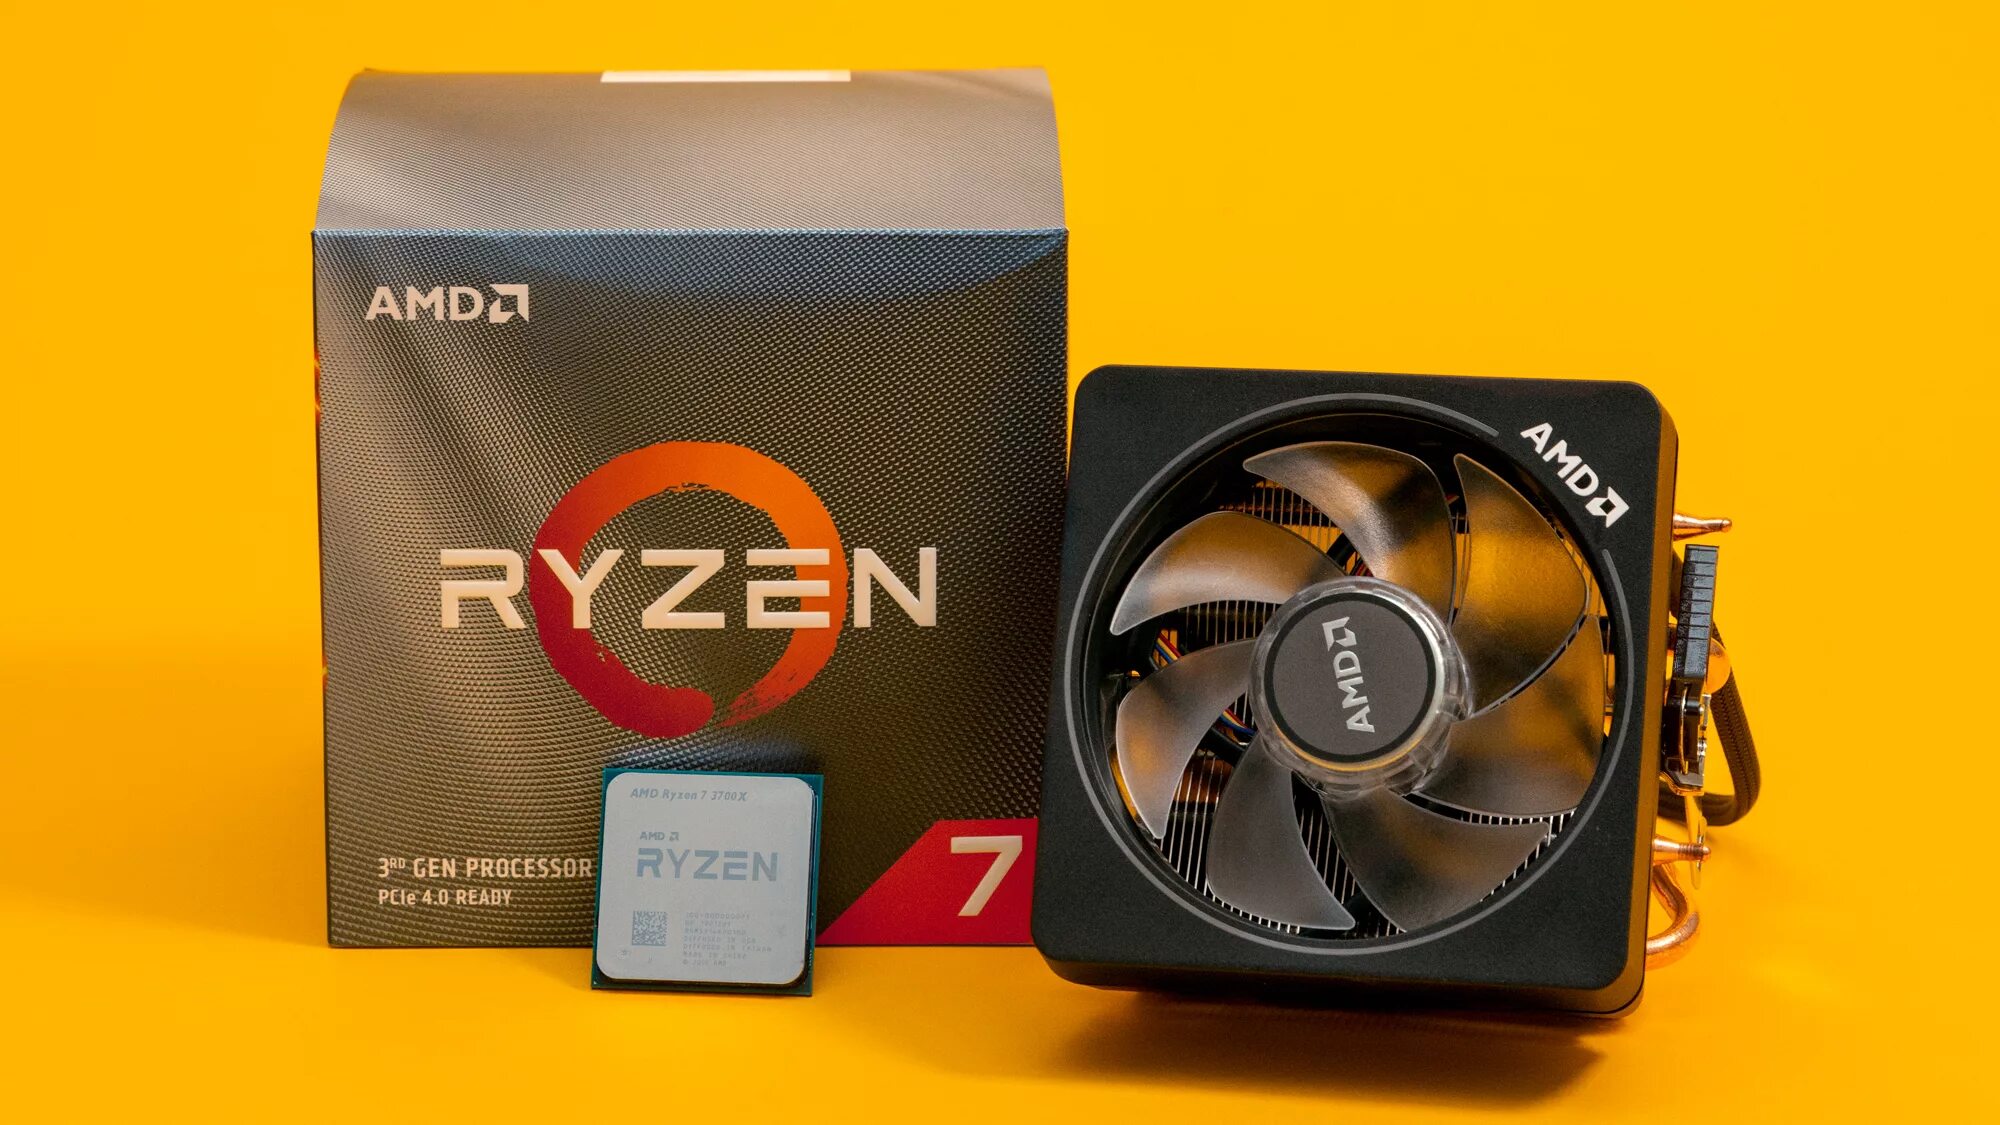 AMD Ryzen 7 3700x. Процессор AMD Ryzen 7 3700x Box. AMD Ryzen 7 2700x. AMD Ryzen 7 5800x кулер.